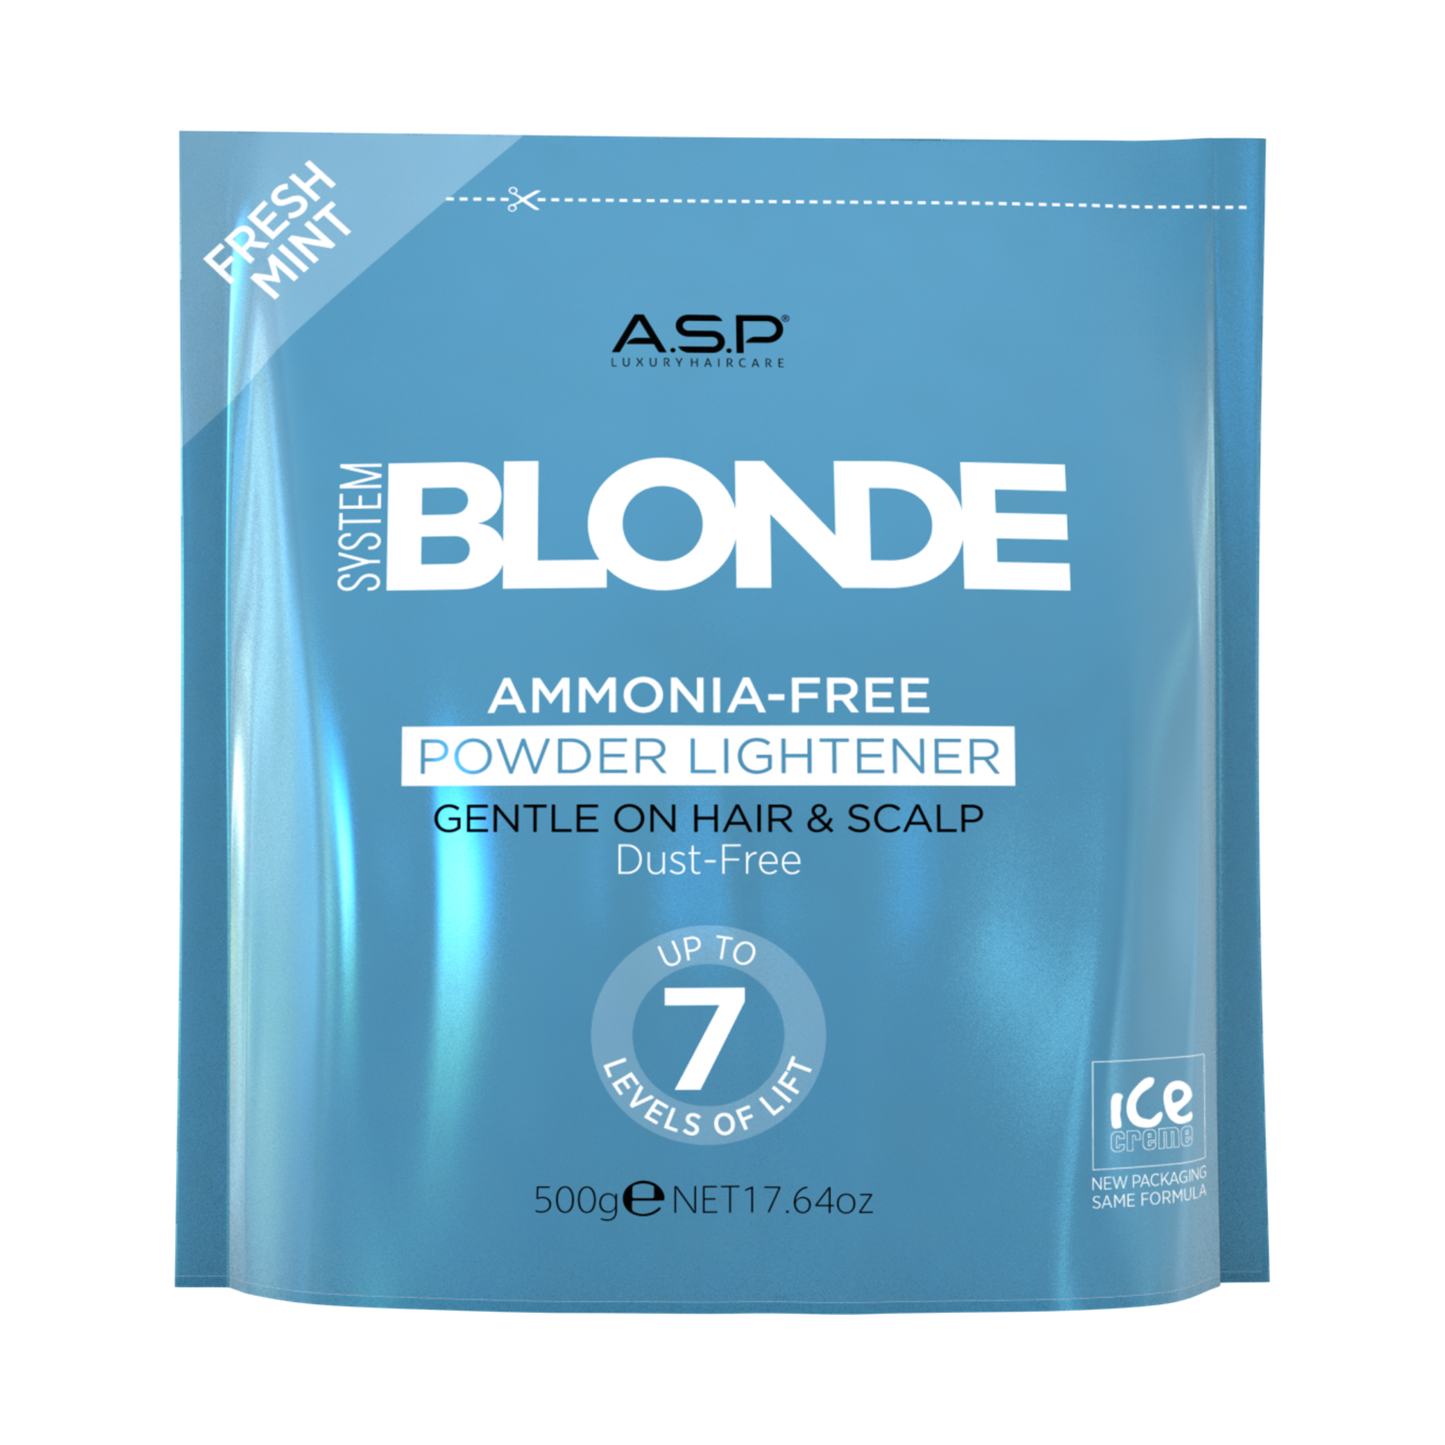 ASP System Blonde Powder Lightener 7 Lift Dust Free Ammonia Free